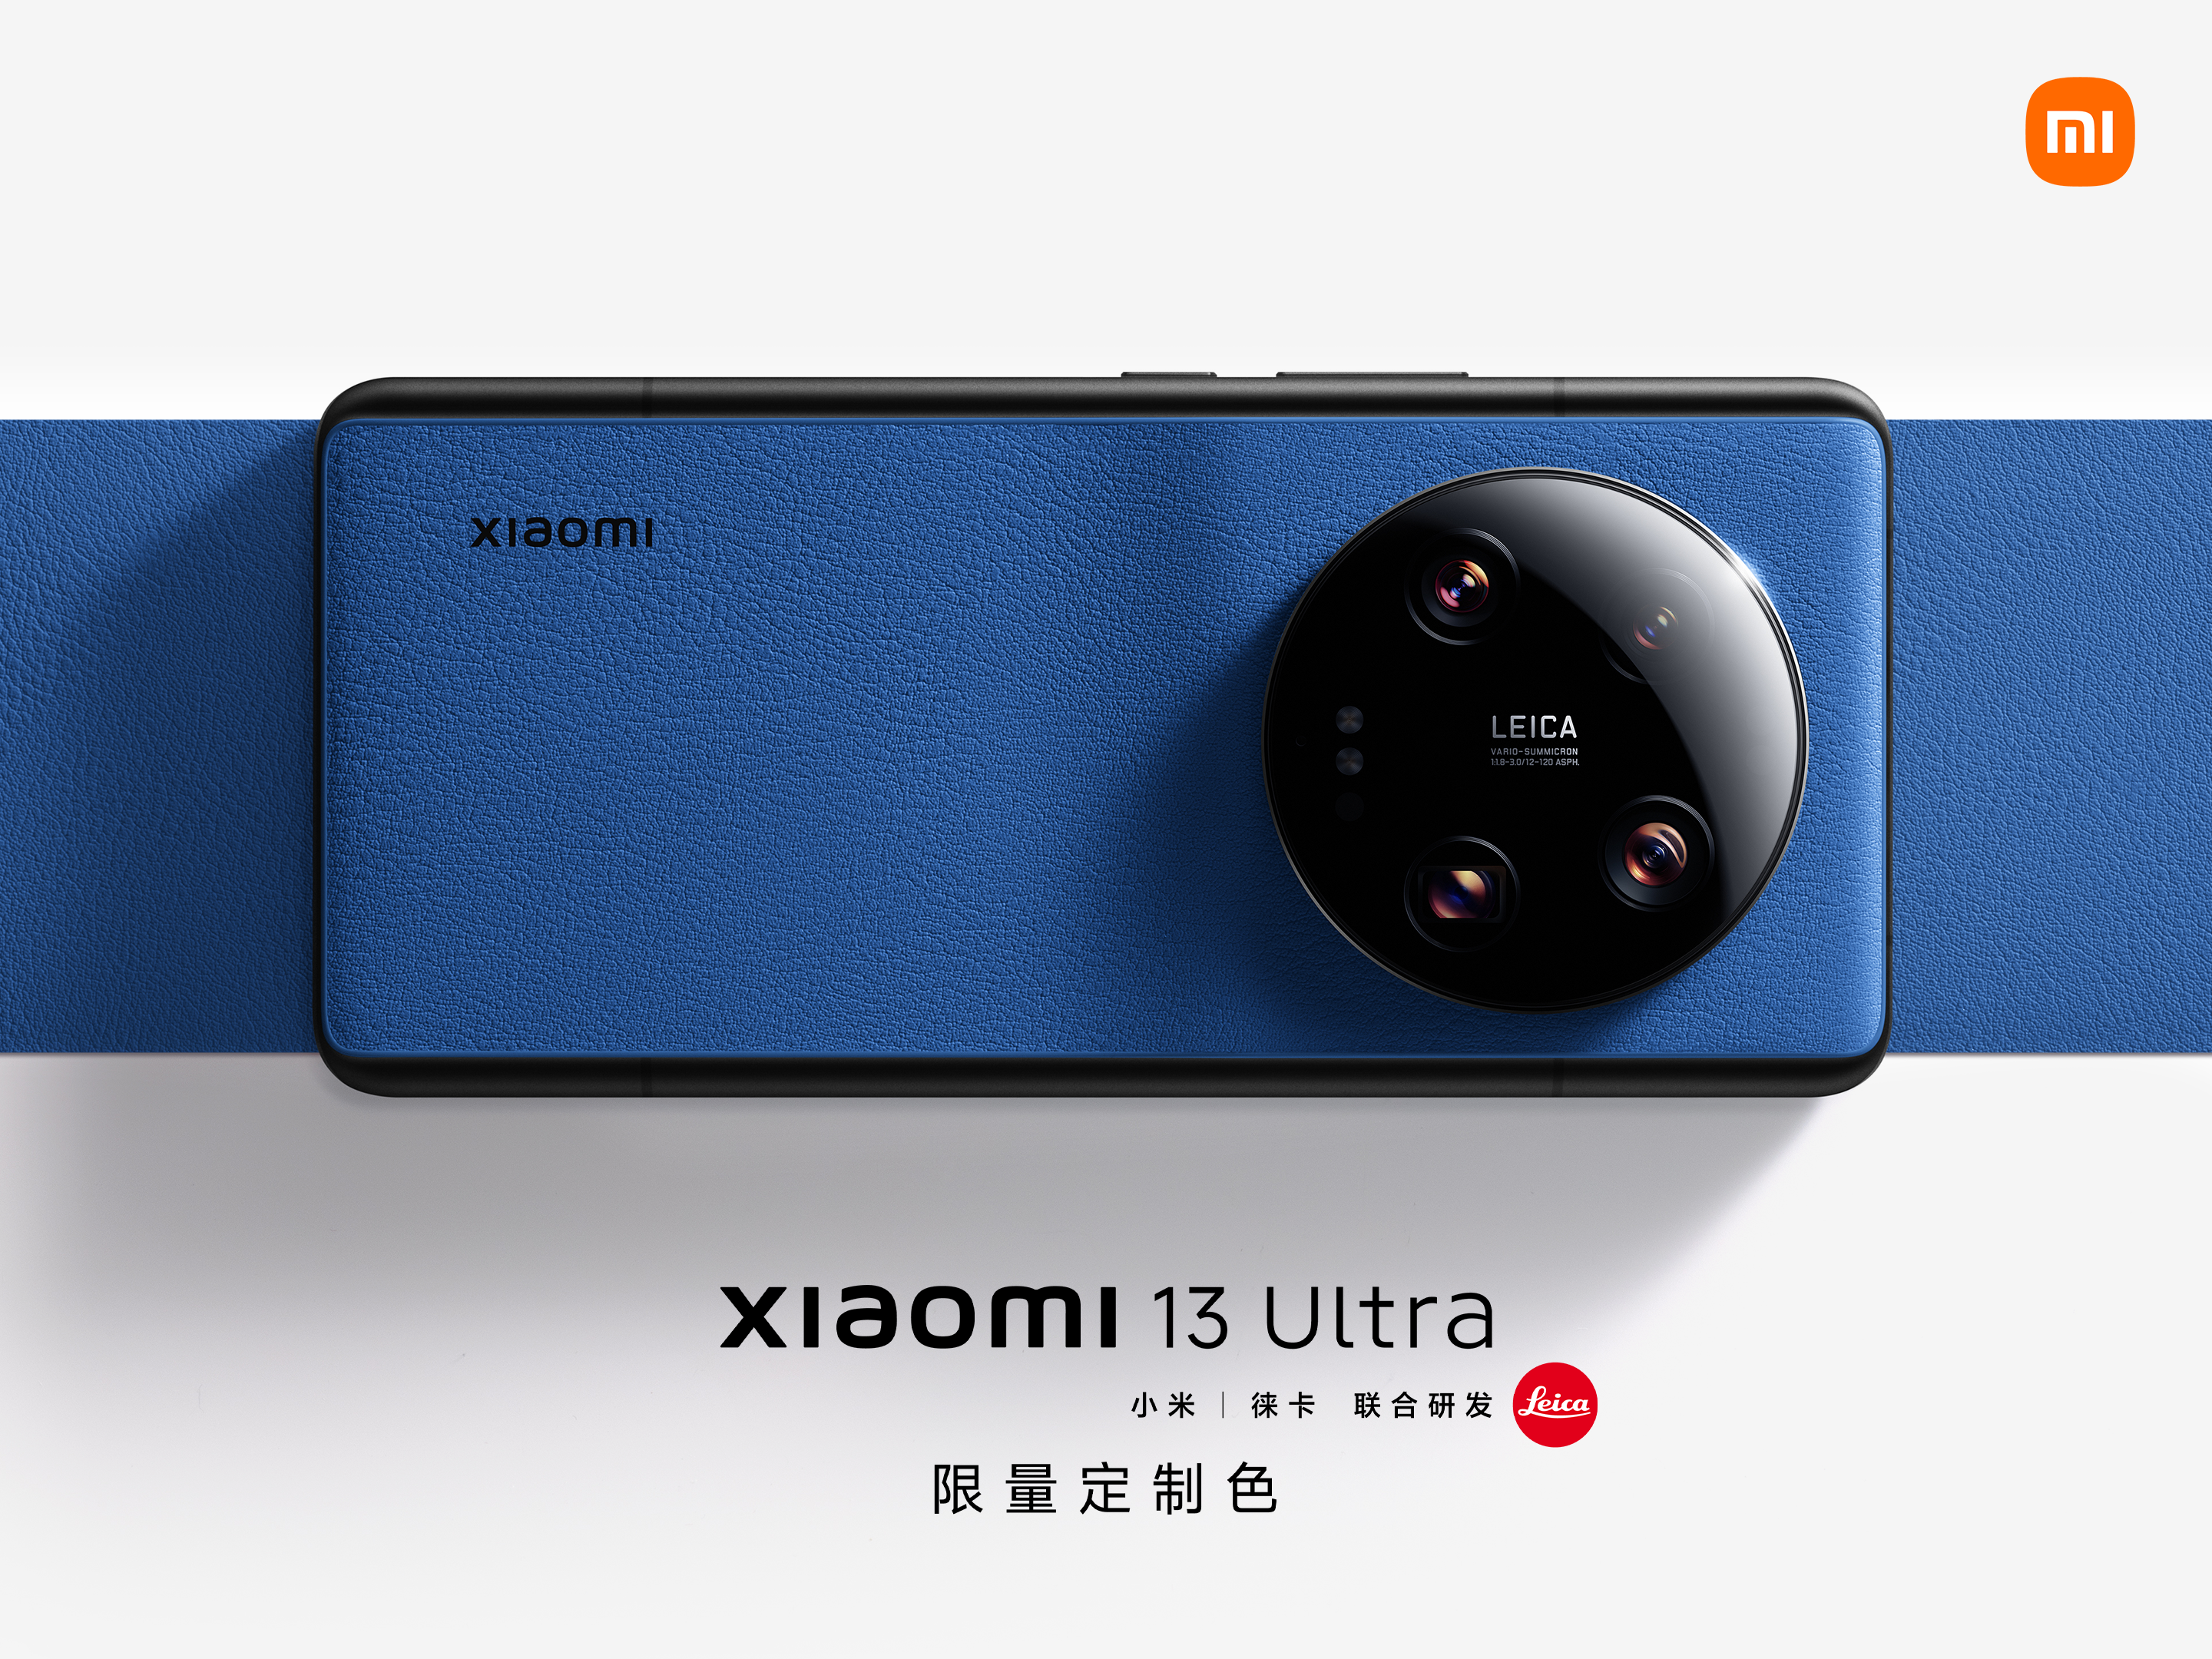 Hiaomi13ultra. 13 Ультра Xiaomi. Mi 13 Ultra Pro. Xiaomi 13 Ultra телефон.